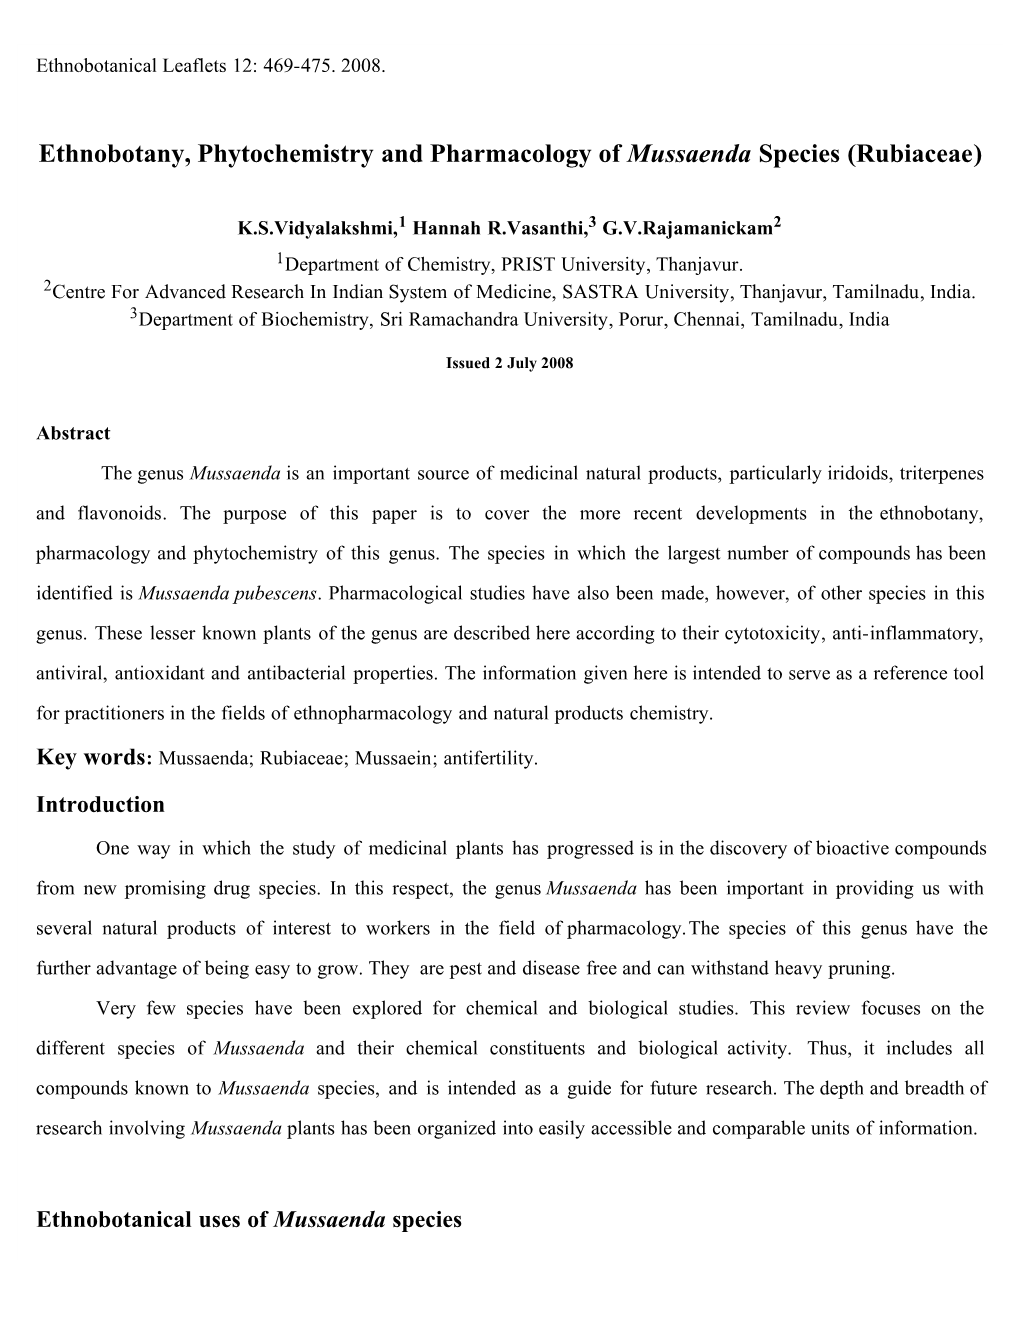 Ethnobotany, Phytochemistry and Pharmacology of Mussaenda Species (Rubiaceae)